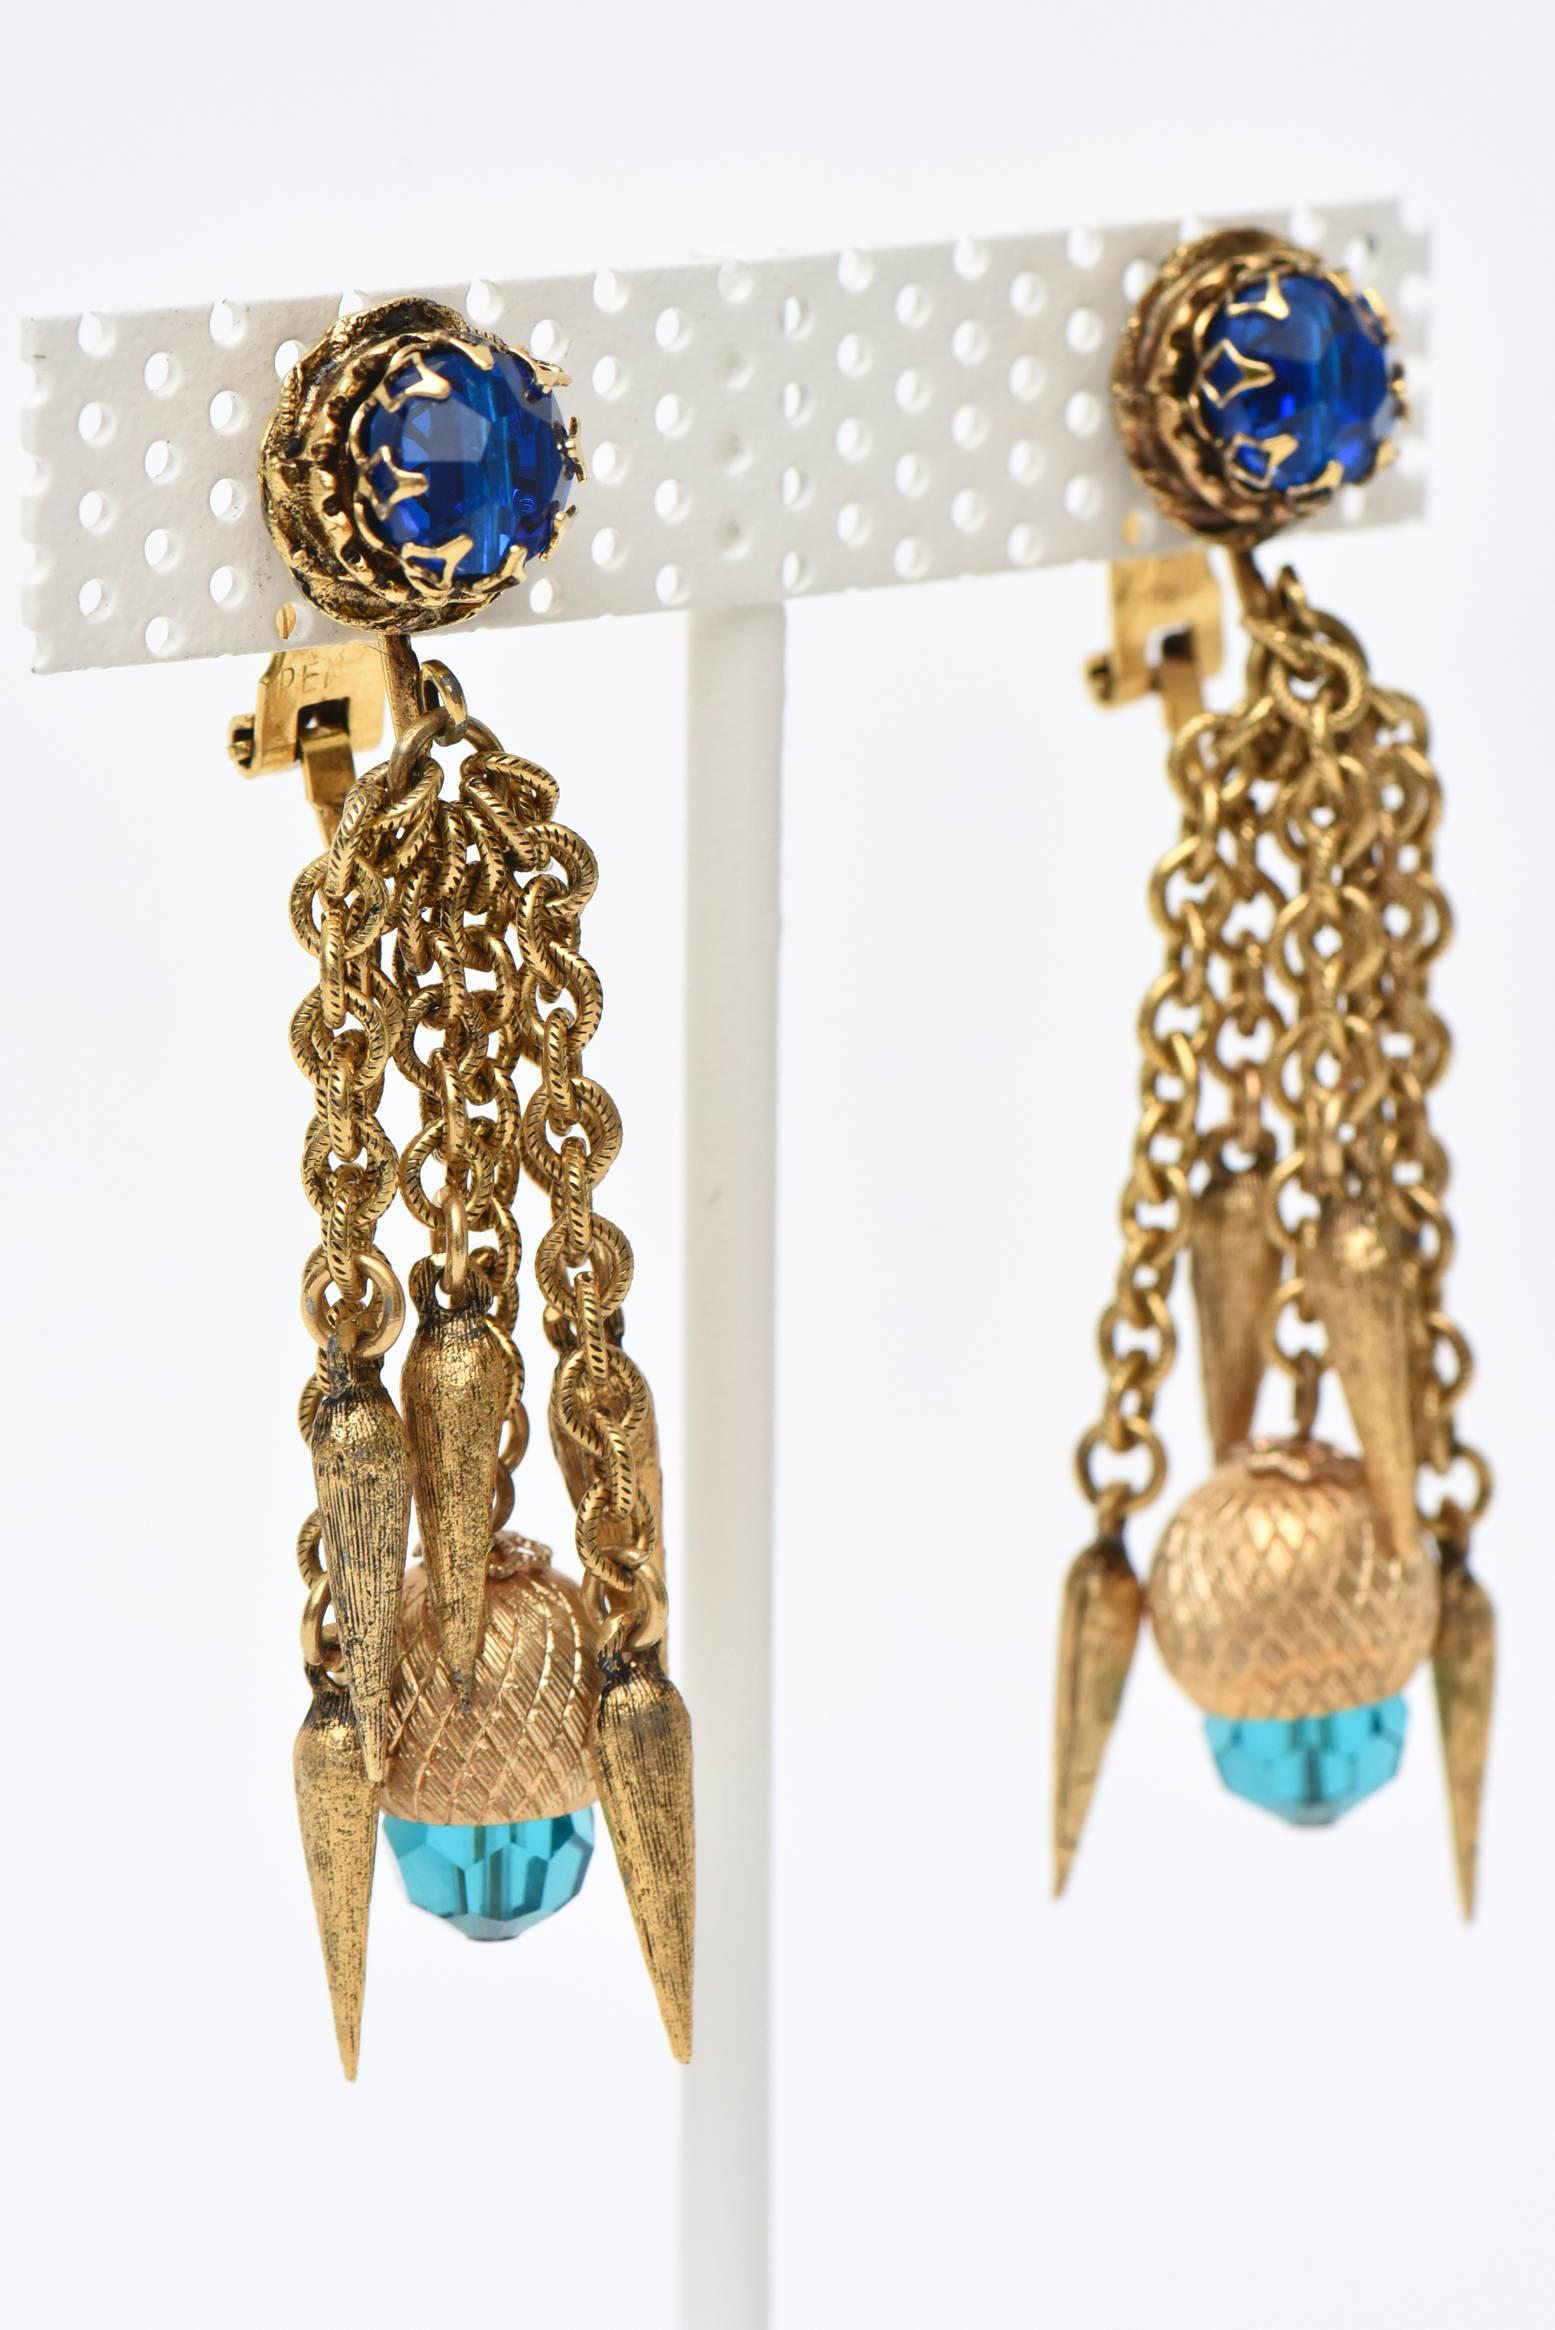 blue crystal earrings dangle